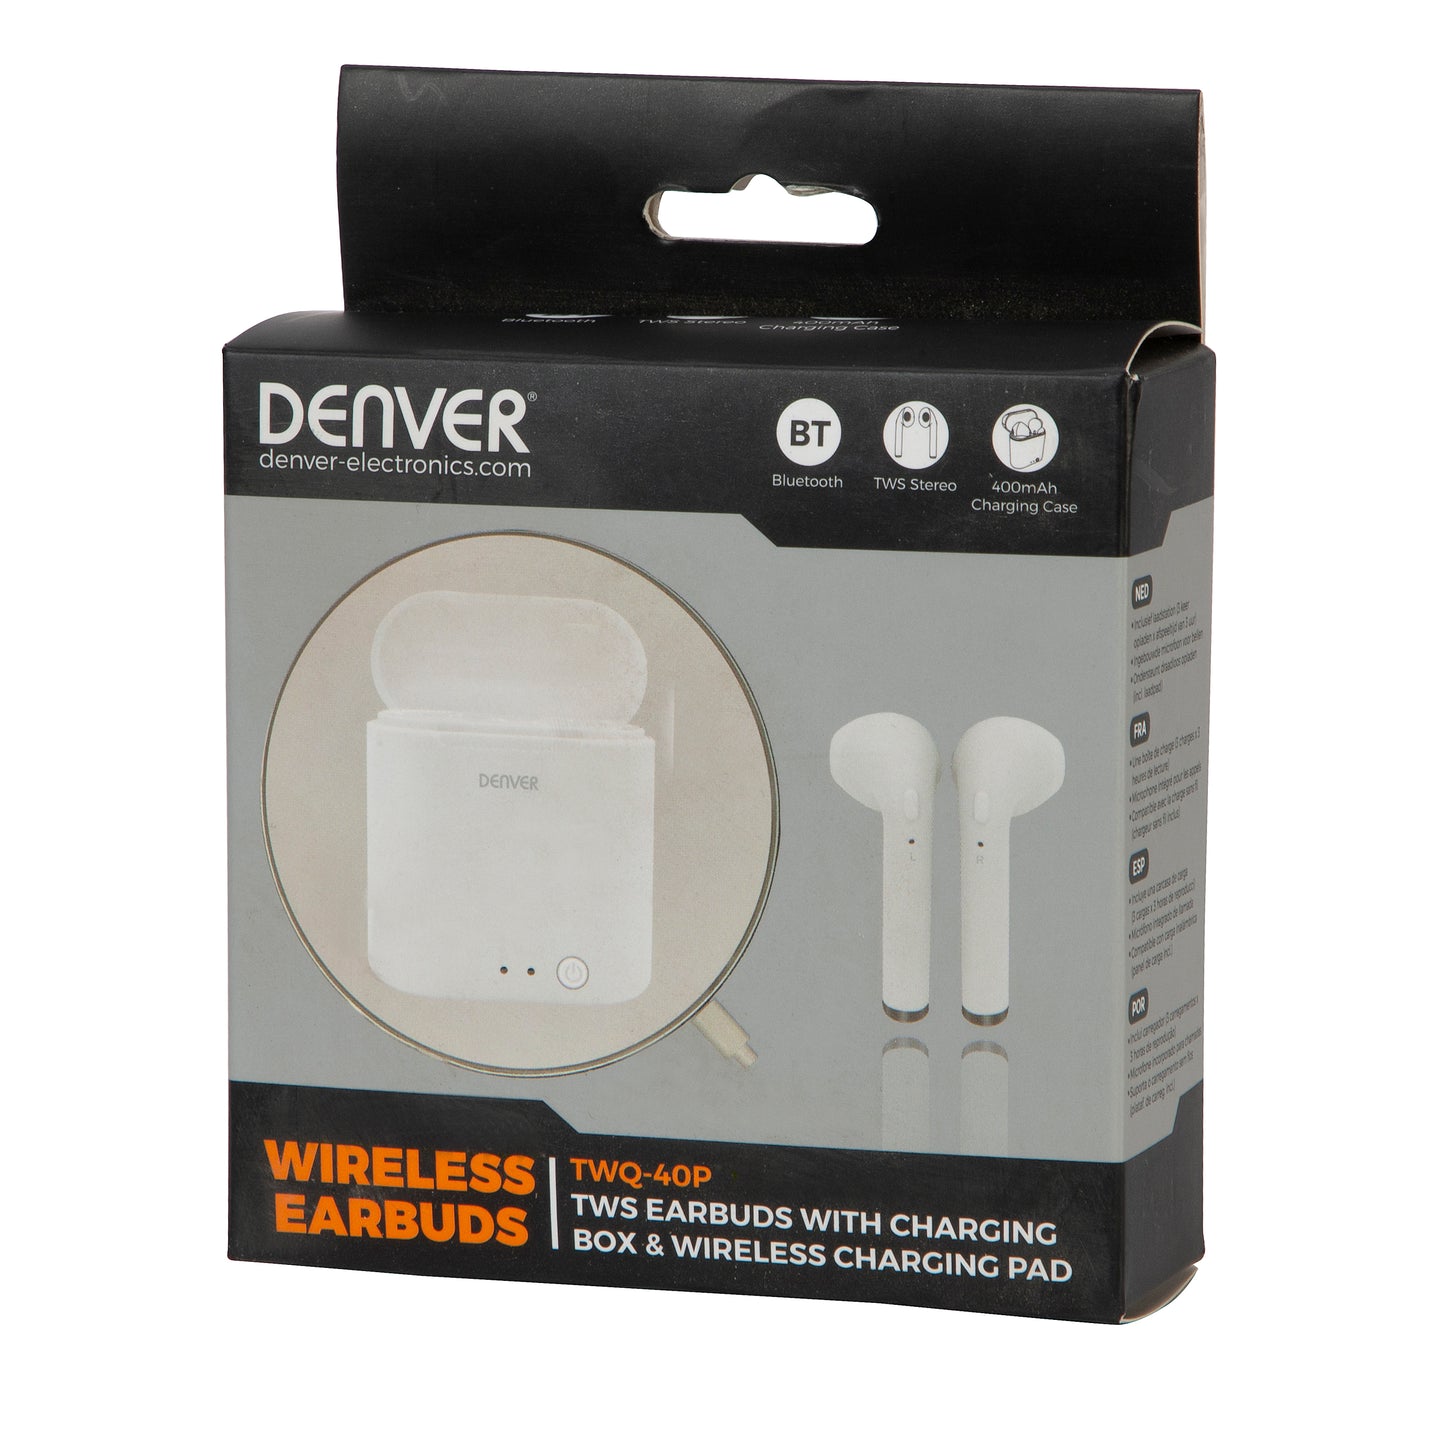 Wireless Bluetooth Headphones with Qi Charging - Denver TWQ-40P